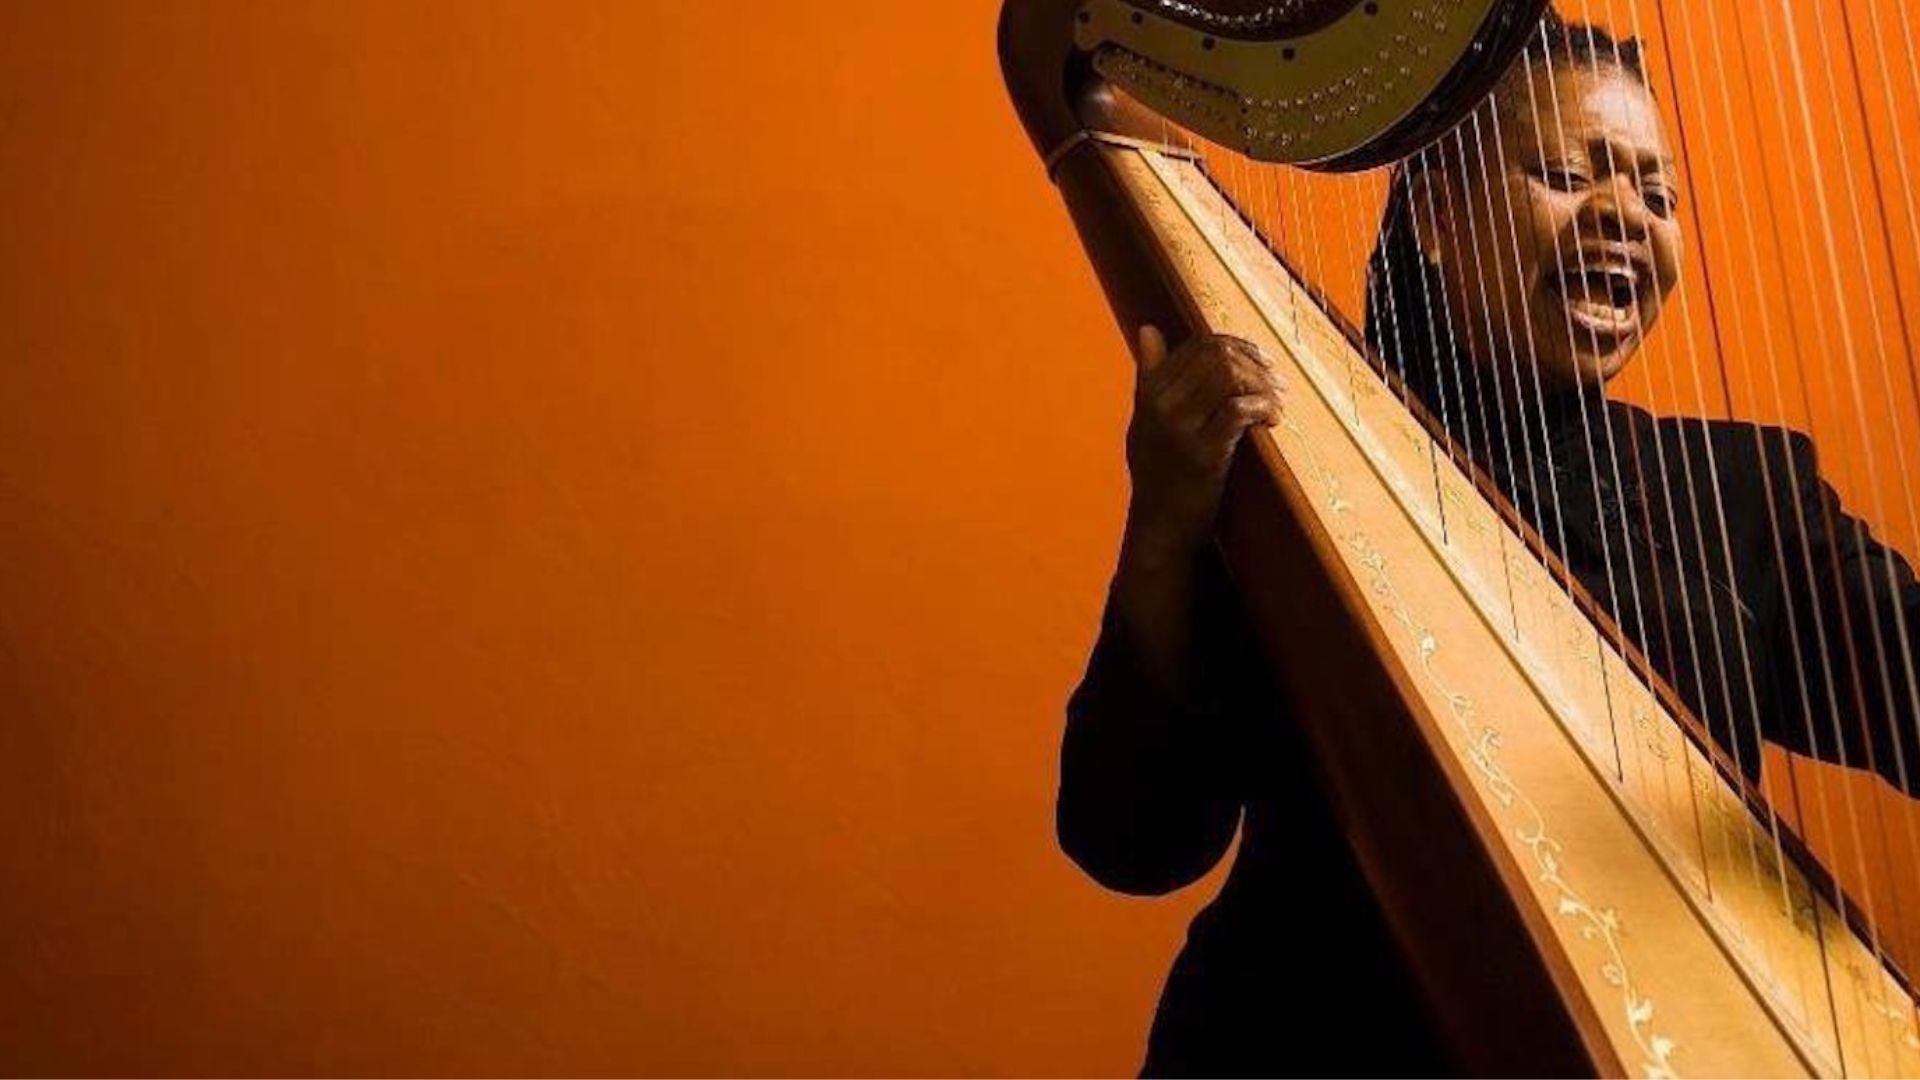 Harp player on an orange background from Destiny Muhammad Jazz Trio